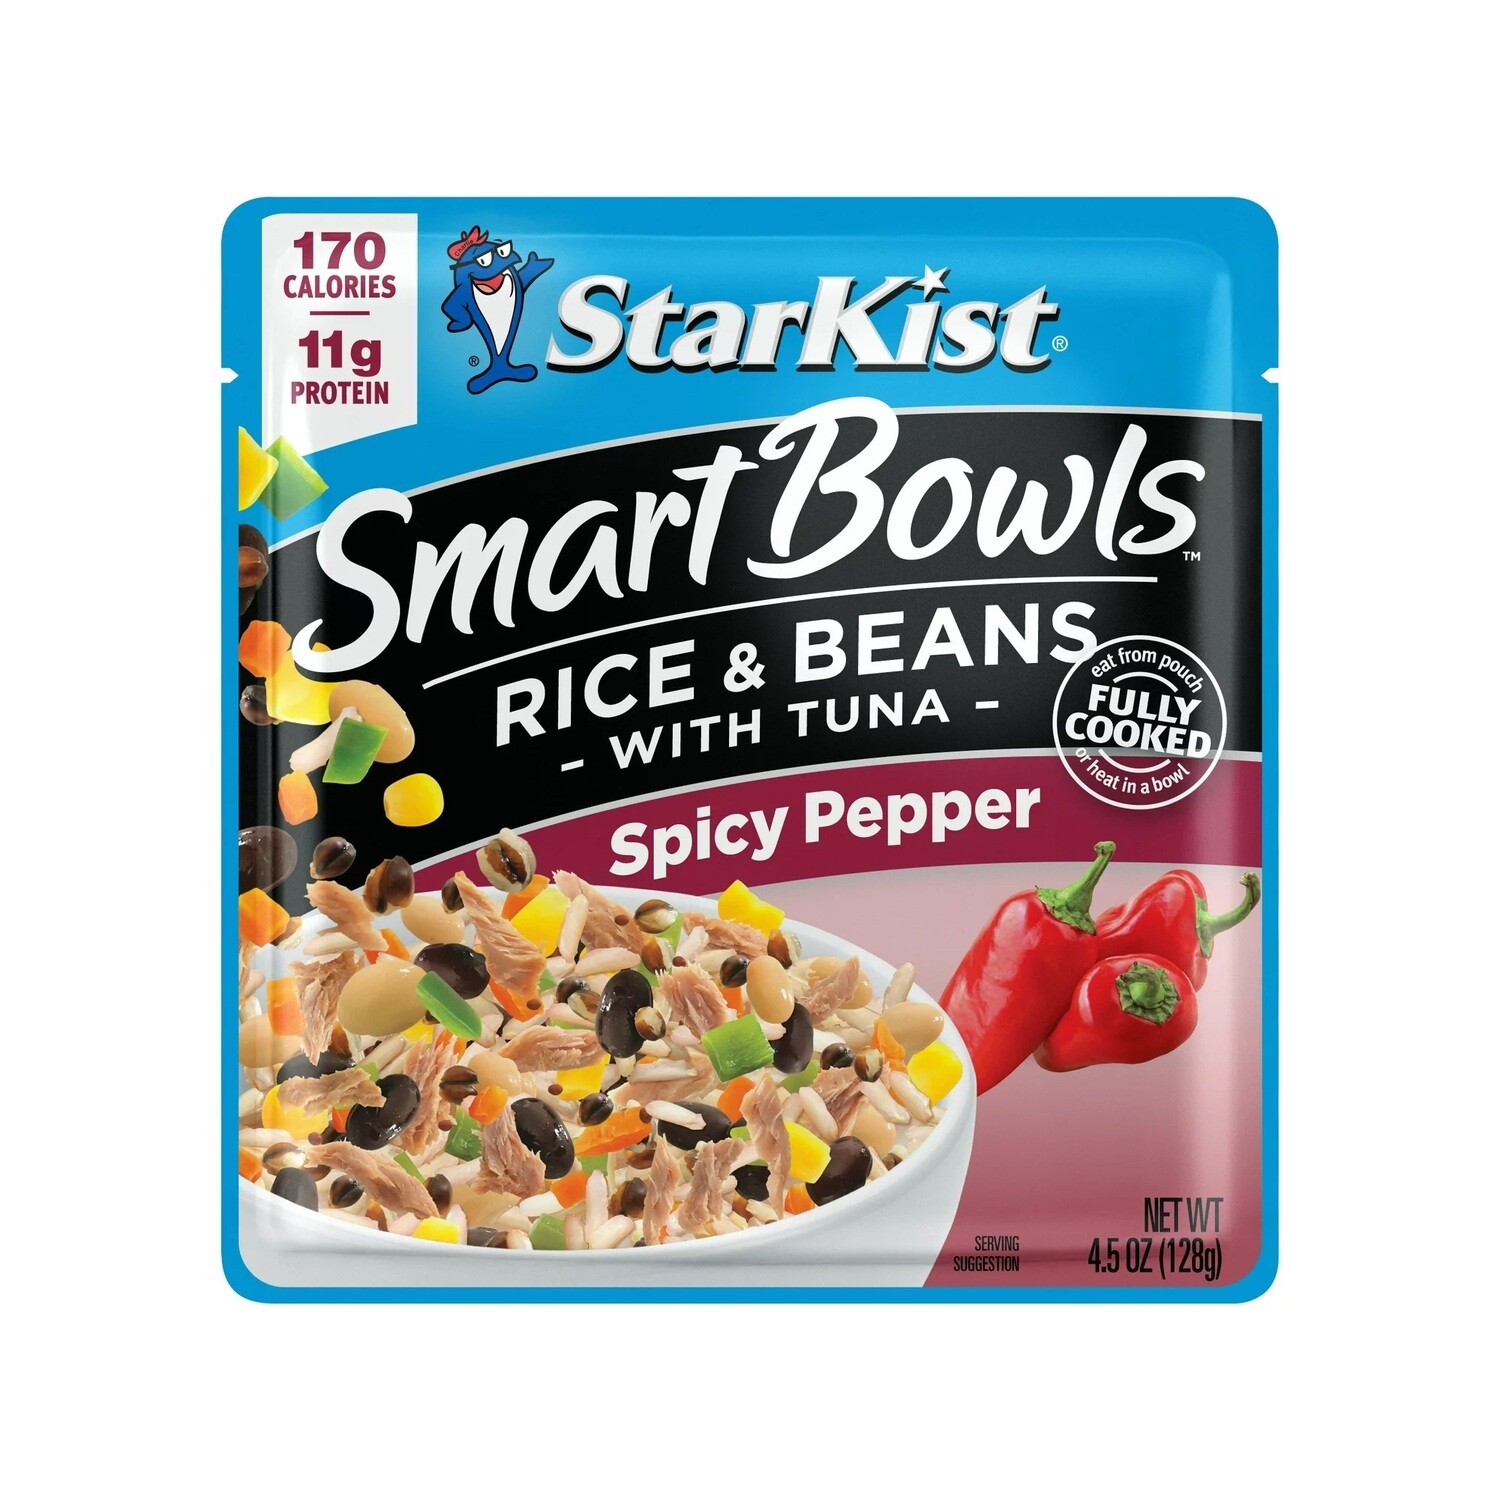 Starkist Smart Bowls - Spicy Pepper Rice & Beans